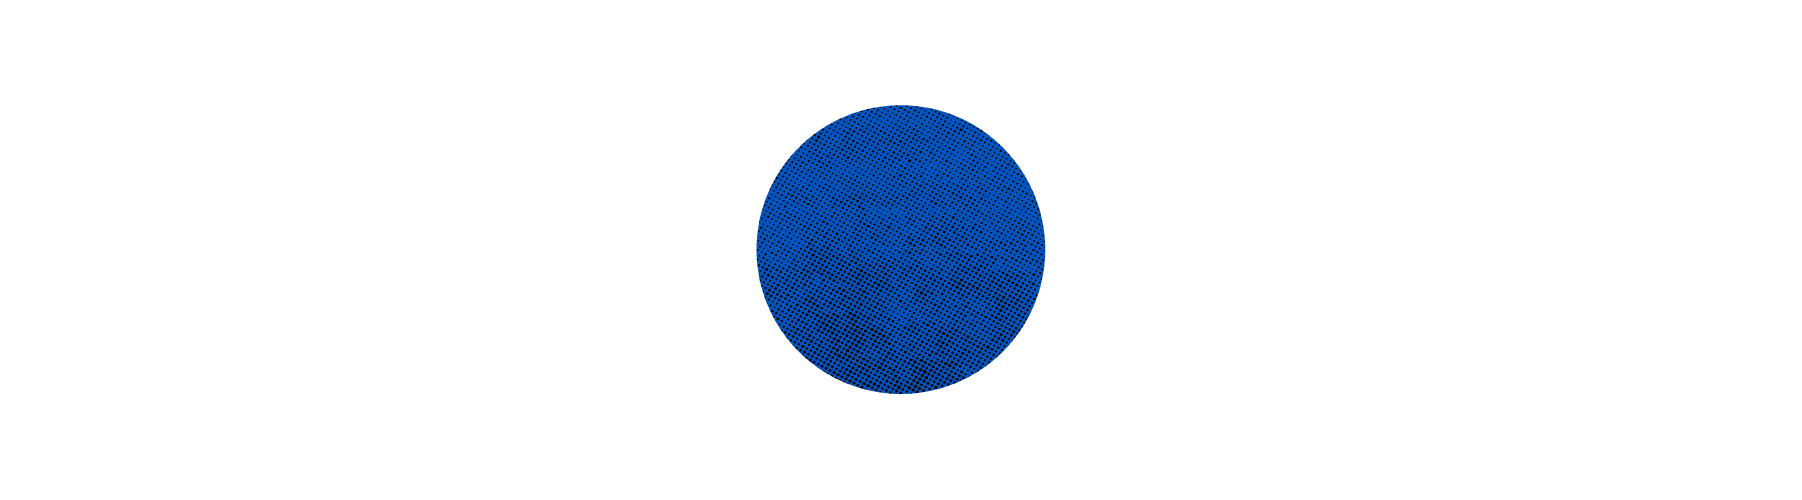 Blue circle line break